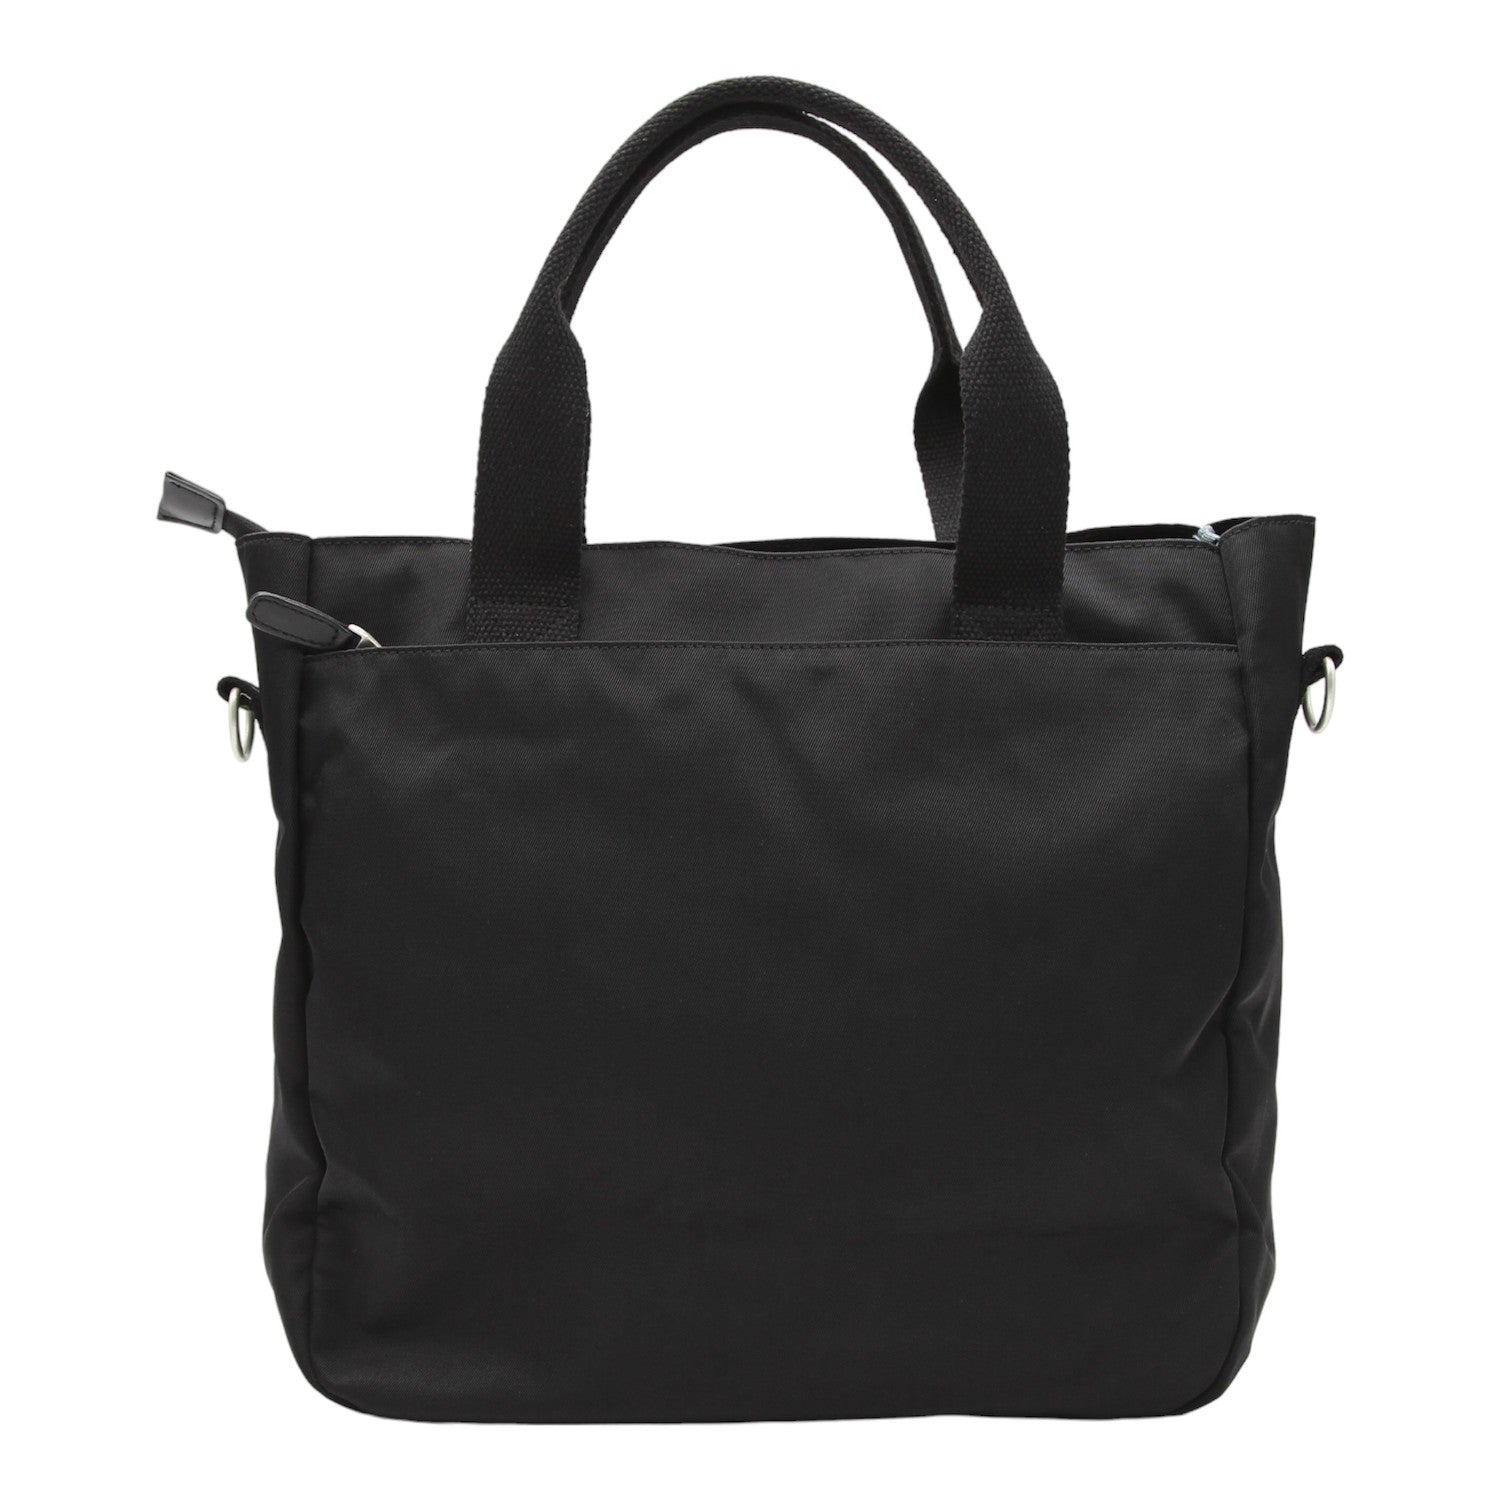 Covent Garden Tote Bag - Black